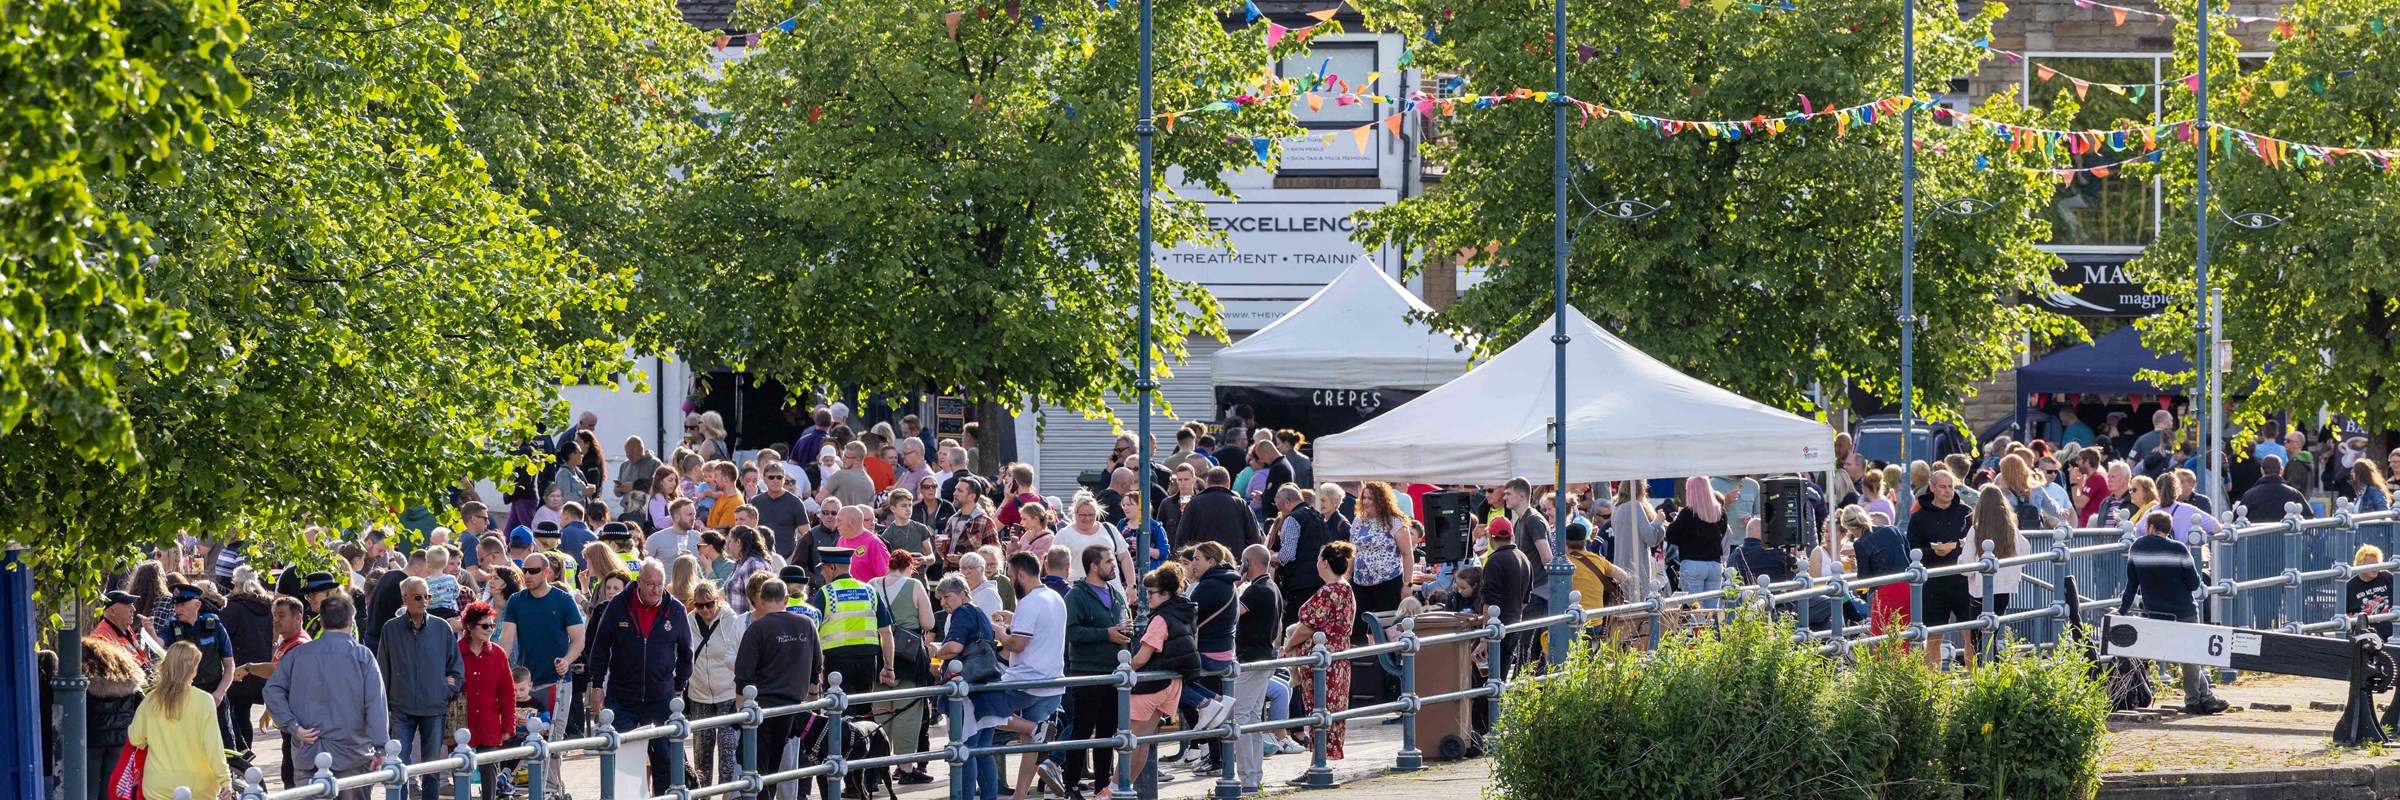 People attending Street Food Festival in Stalybridge